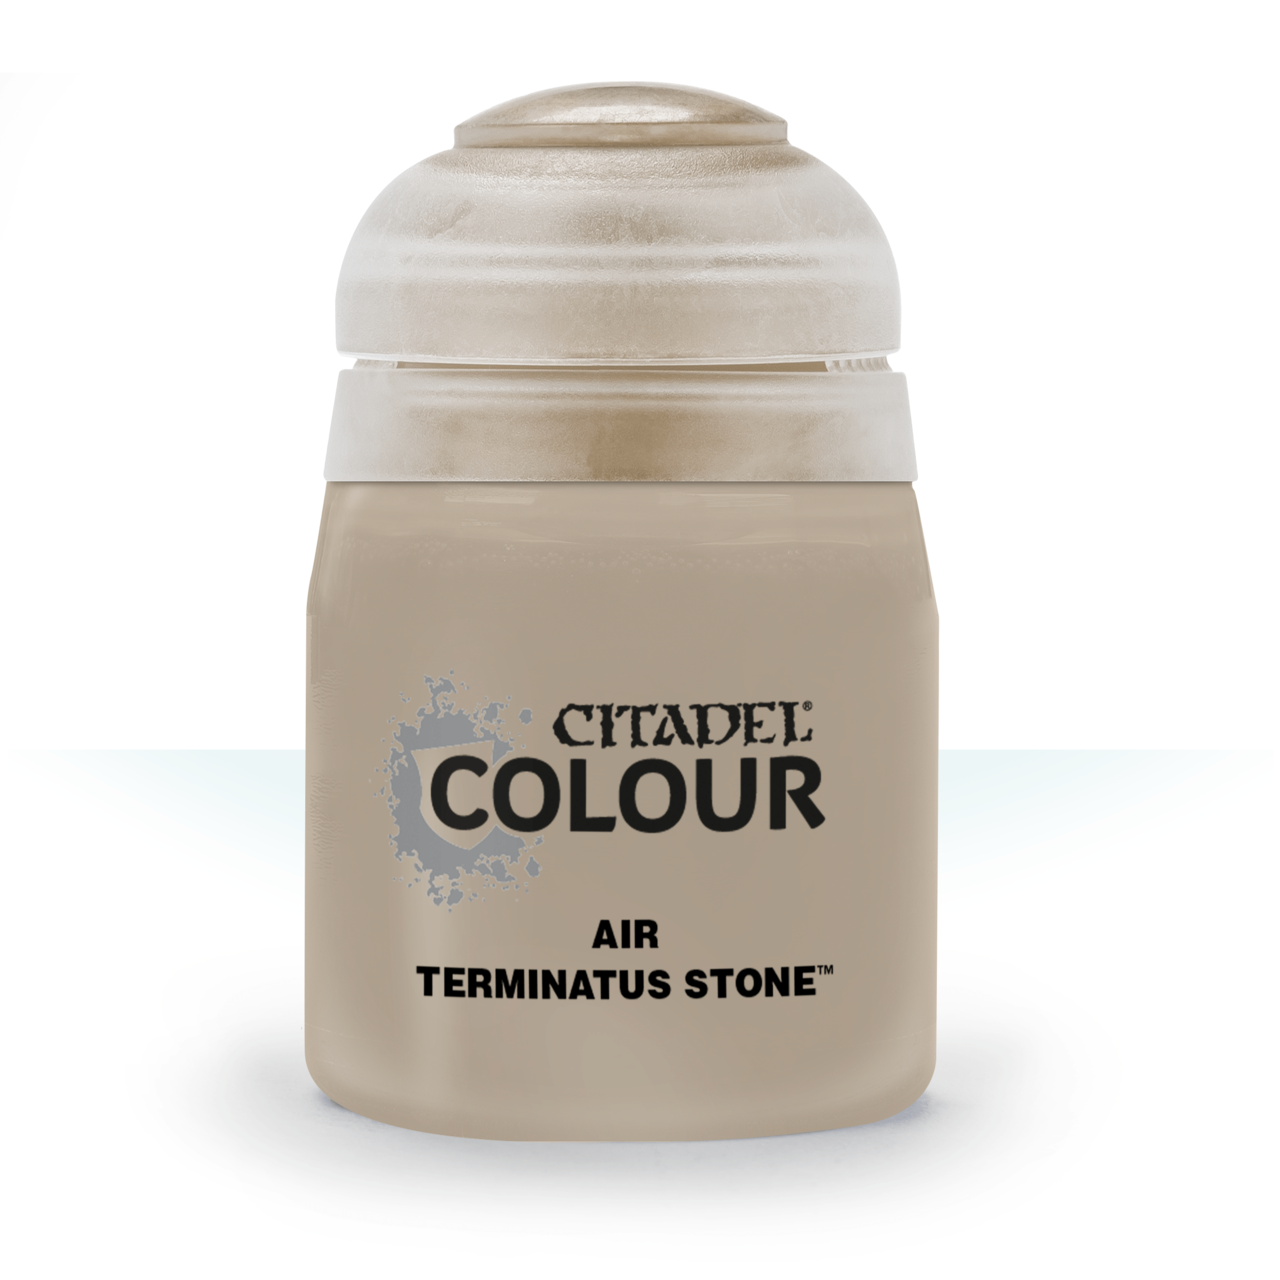 Afbeelding van het spelletje Terminatus Stone - Air (Citadel)